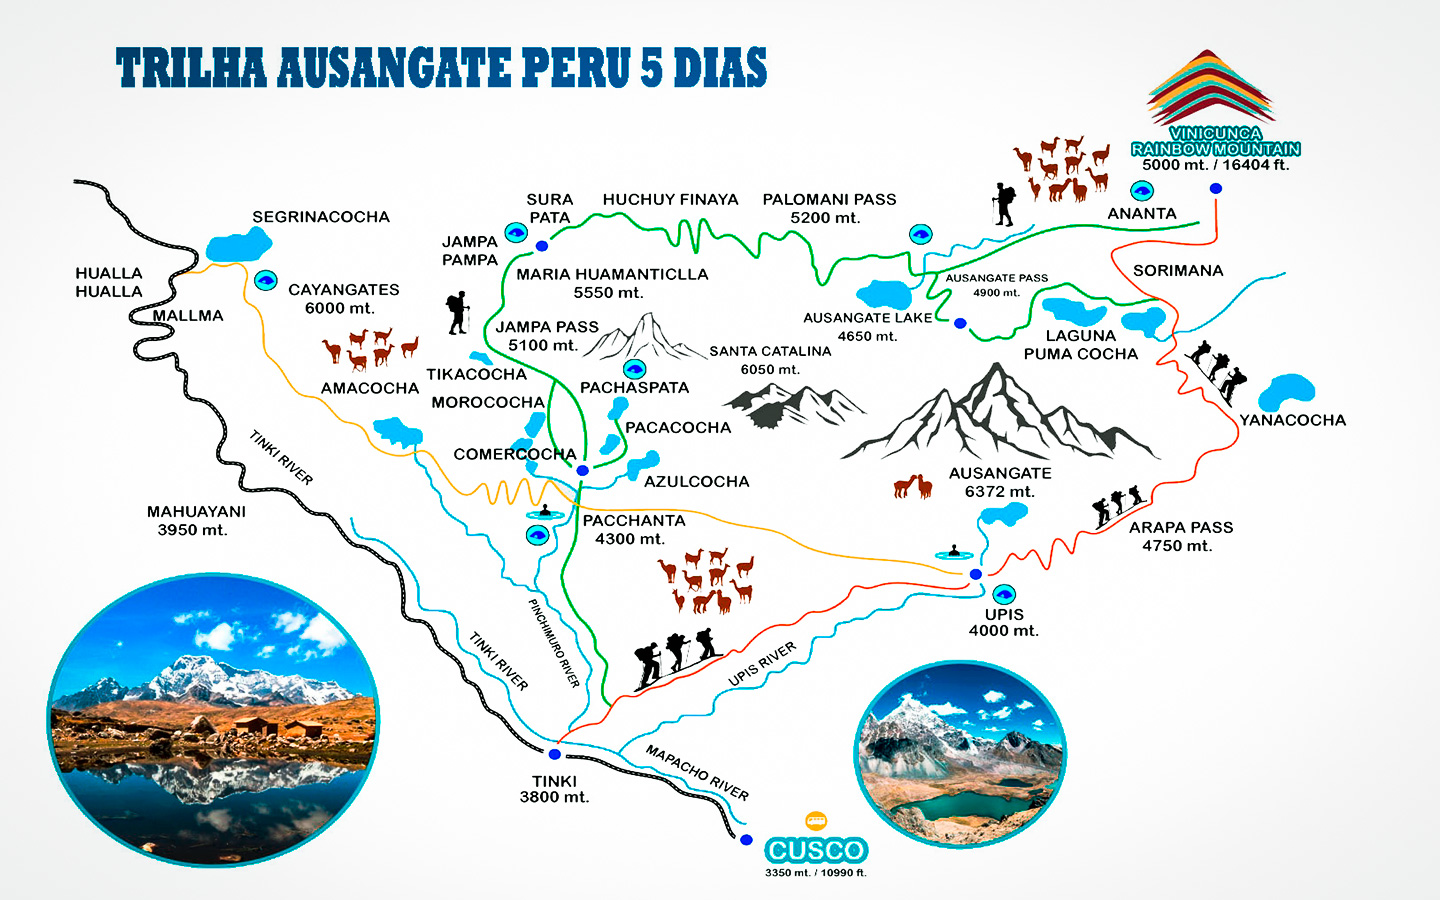 Trilha Ausangate Peru Map & Roteiro